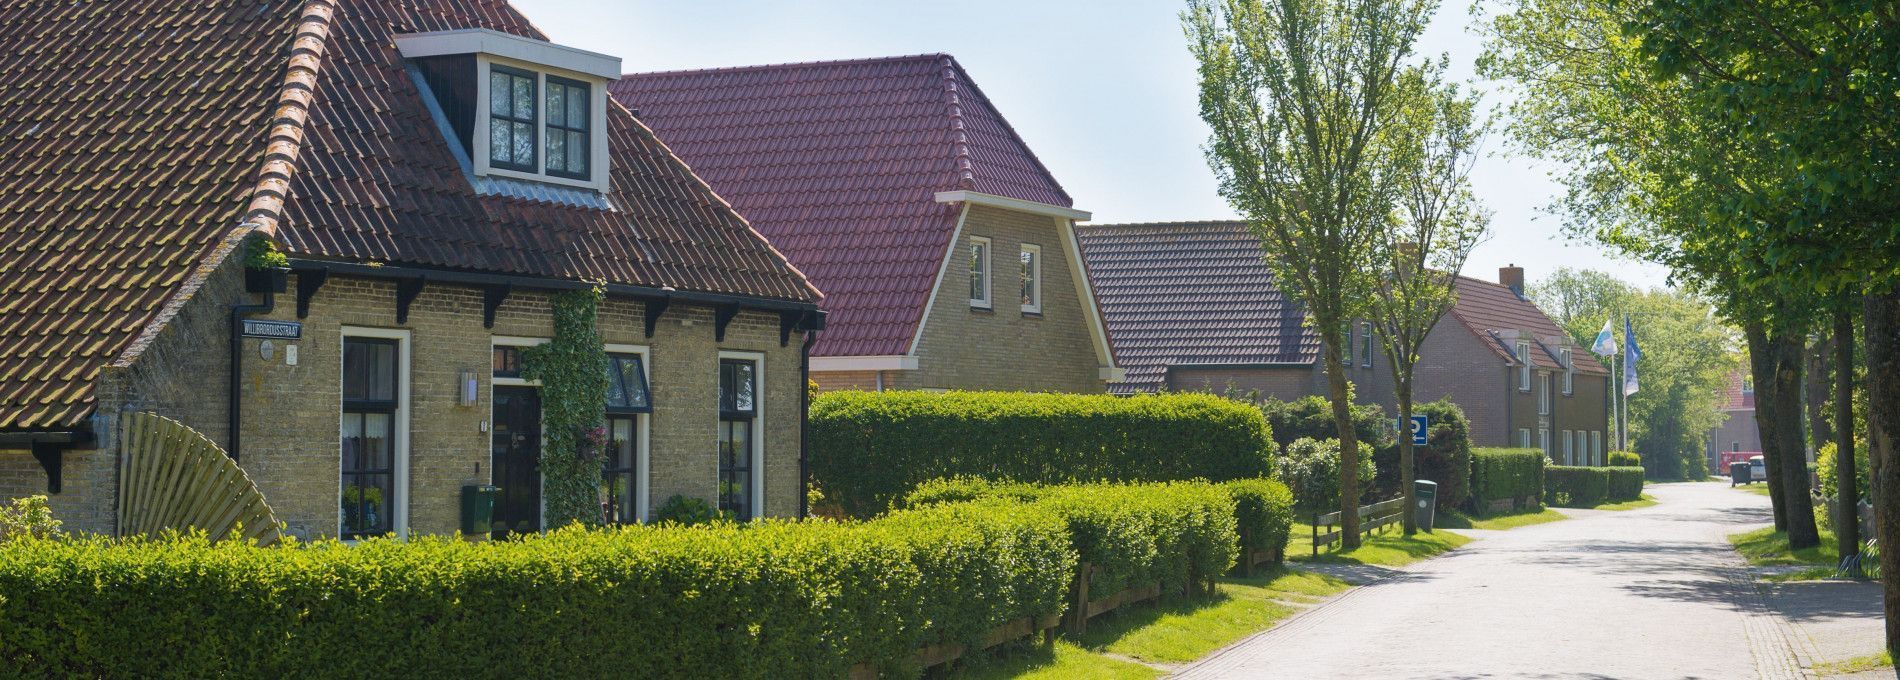 Gruppenhäuser Buren - VVV Ameland